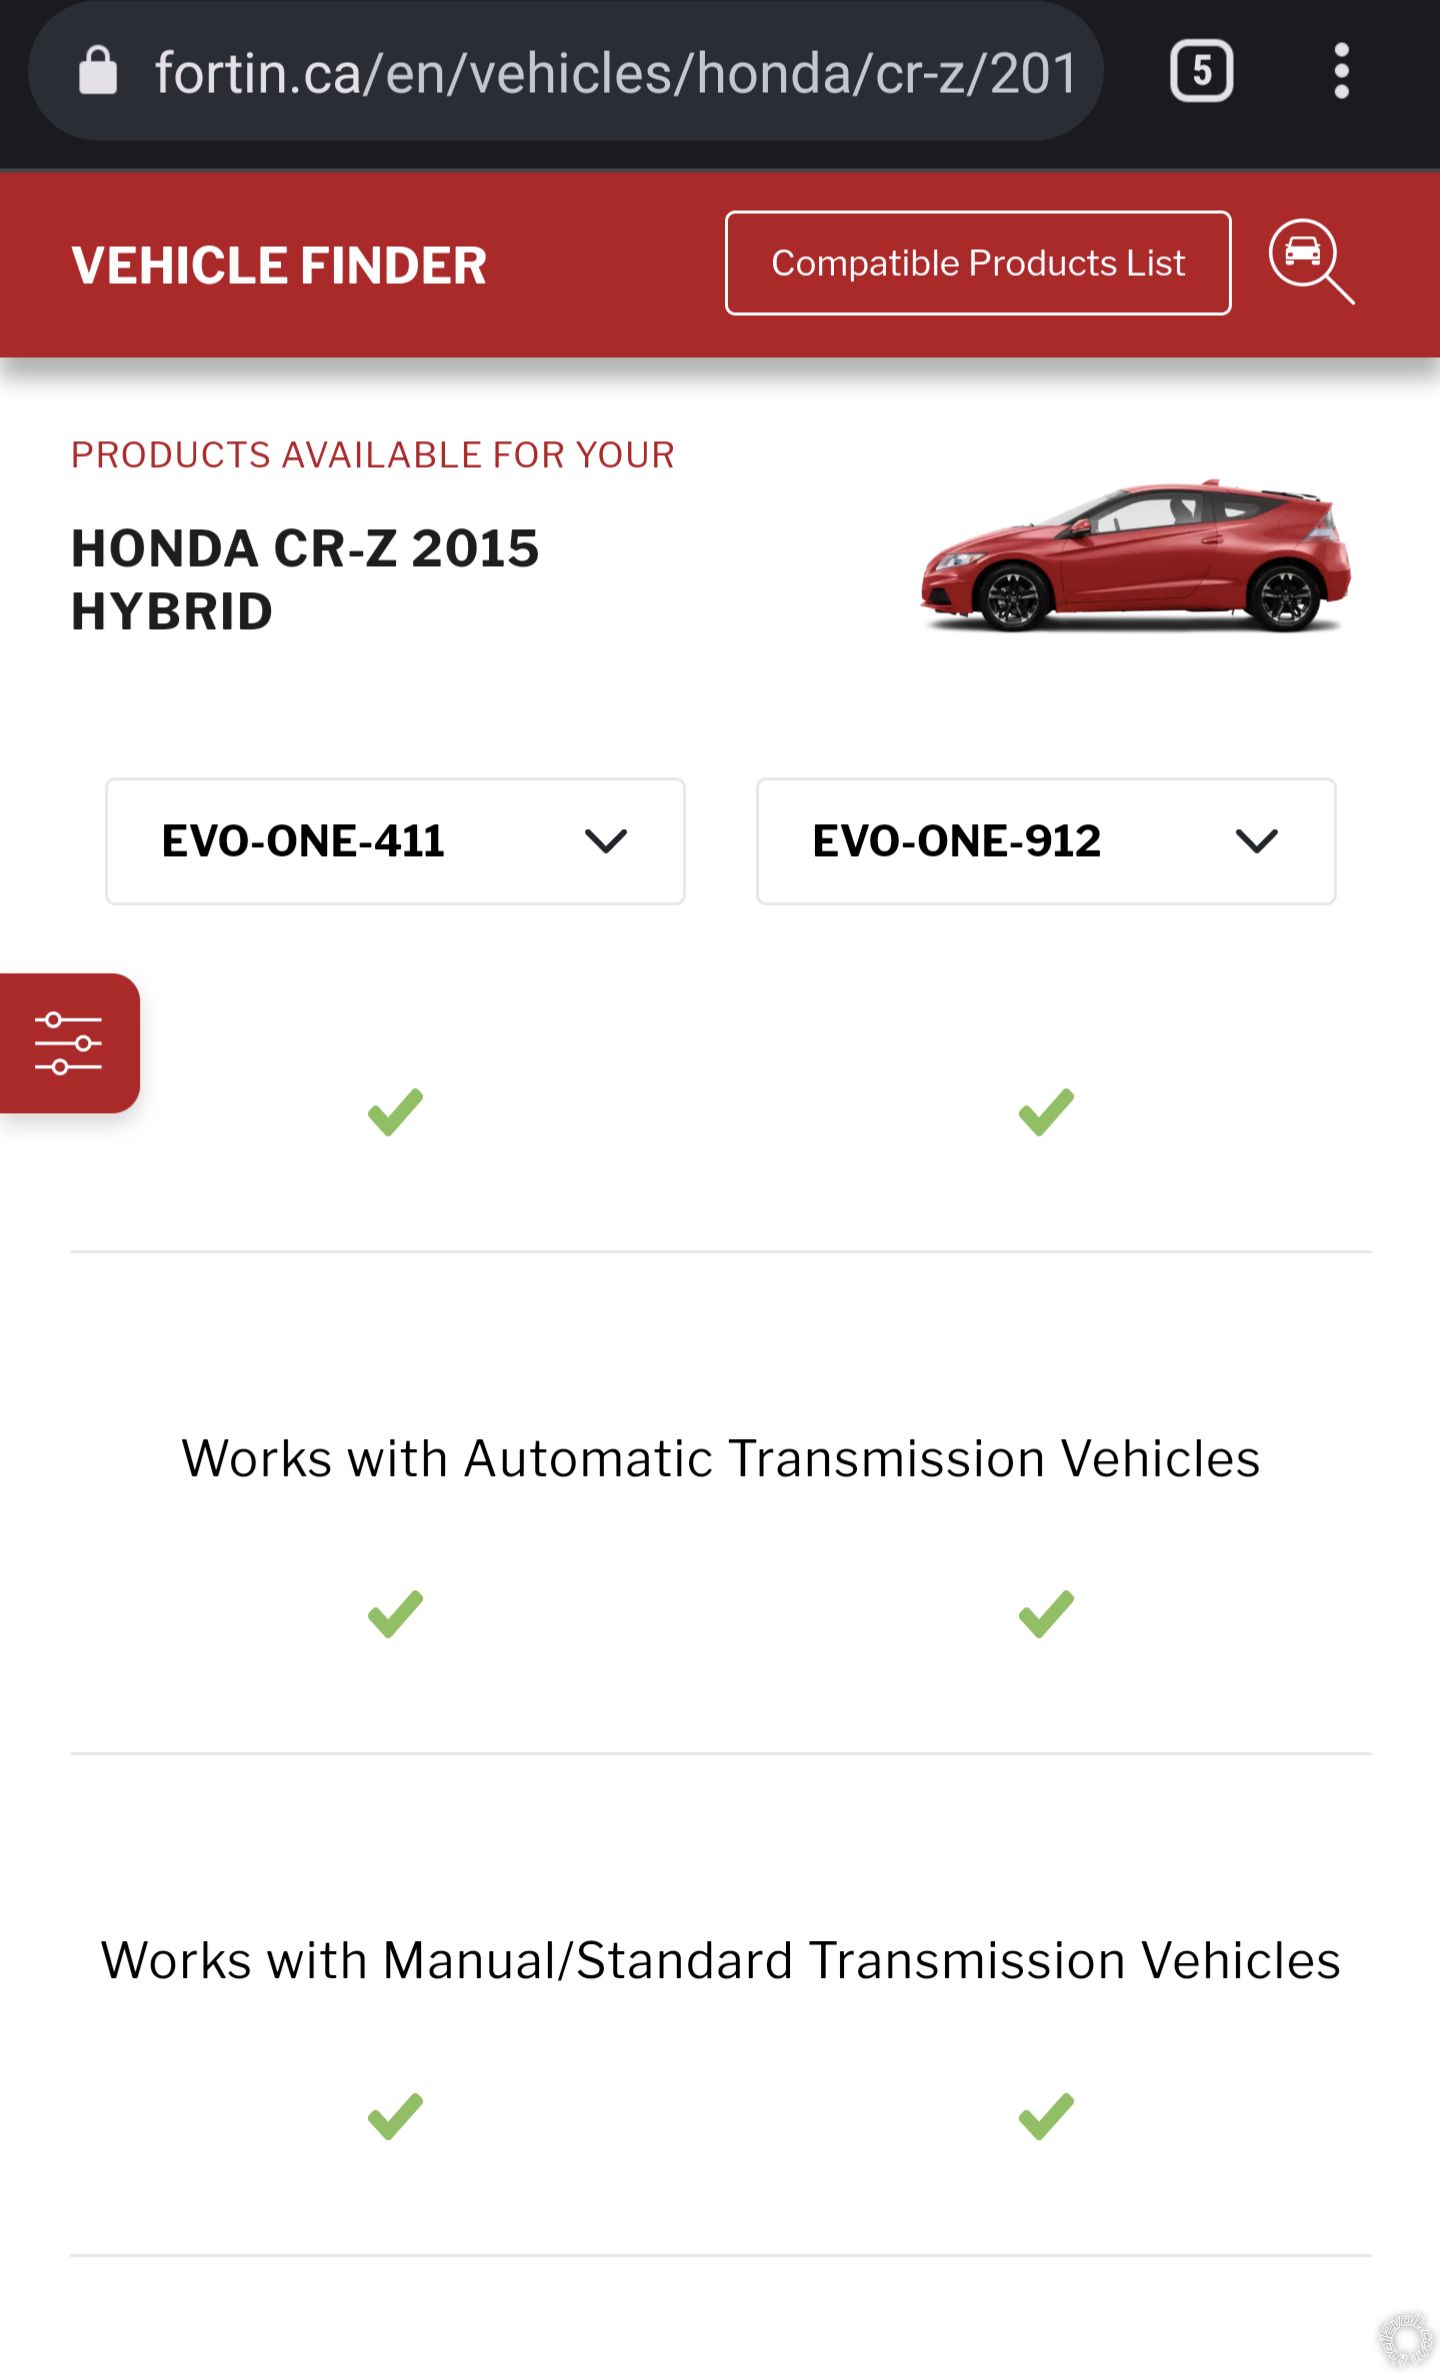 2015 Honda CR-Z Hybrid, Manual Transmission, Remote Start Wiring - Last Post -- posted image.